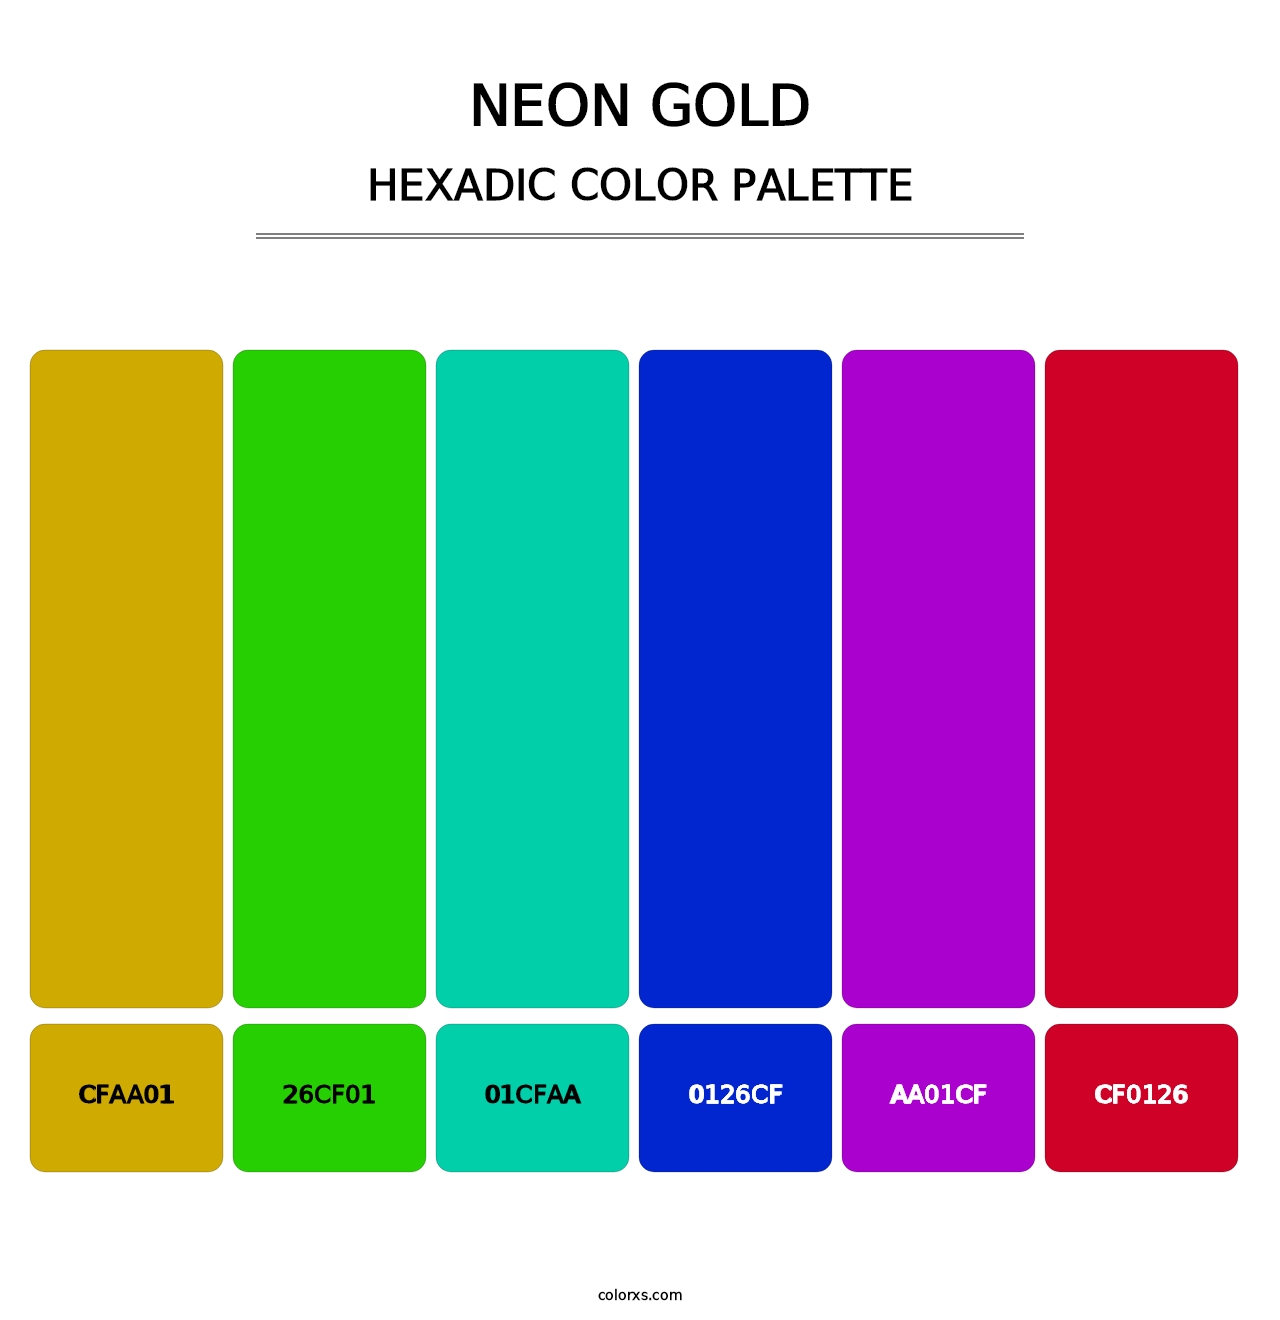 Neon Gold - Hexadic Color Palette